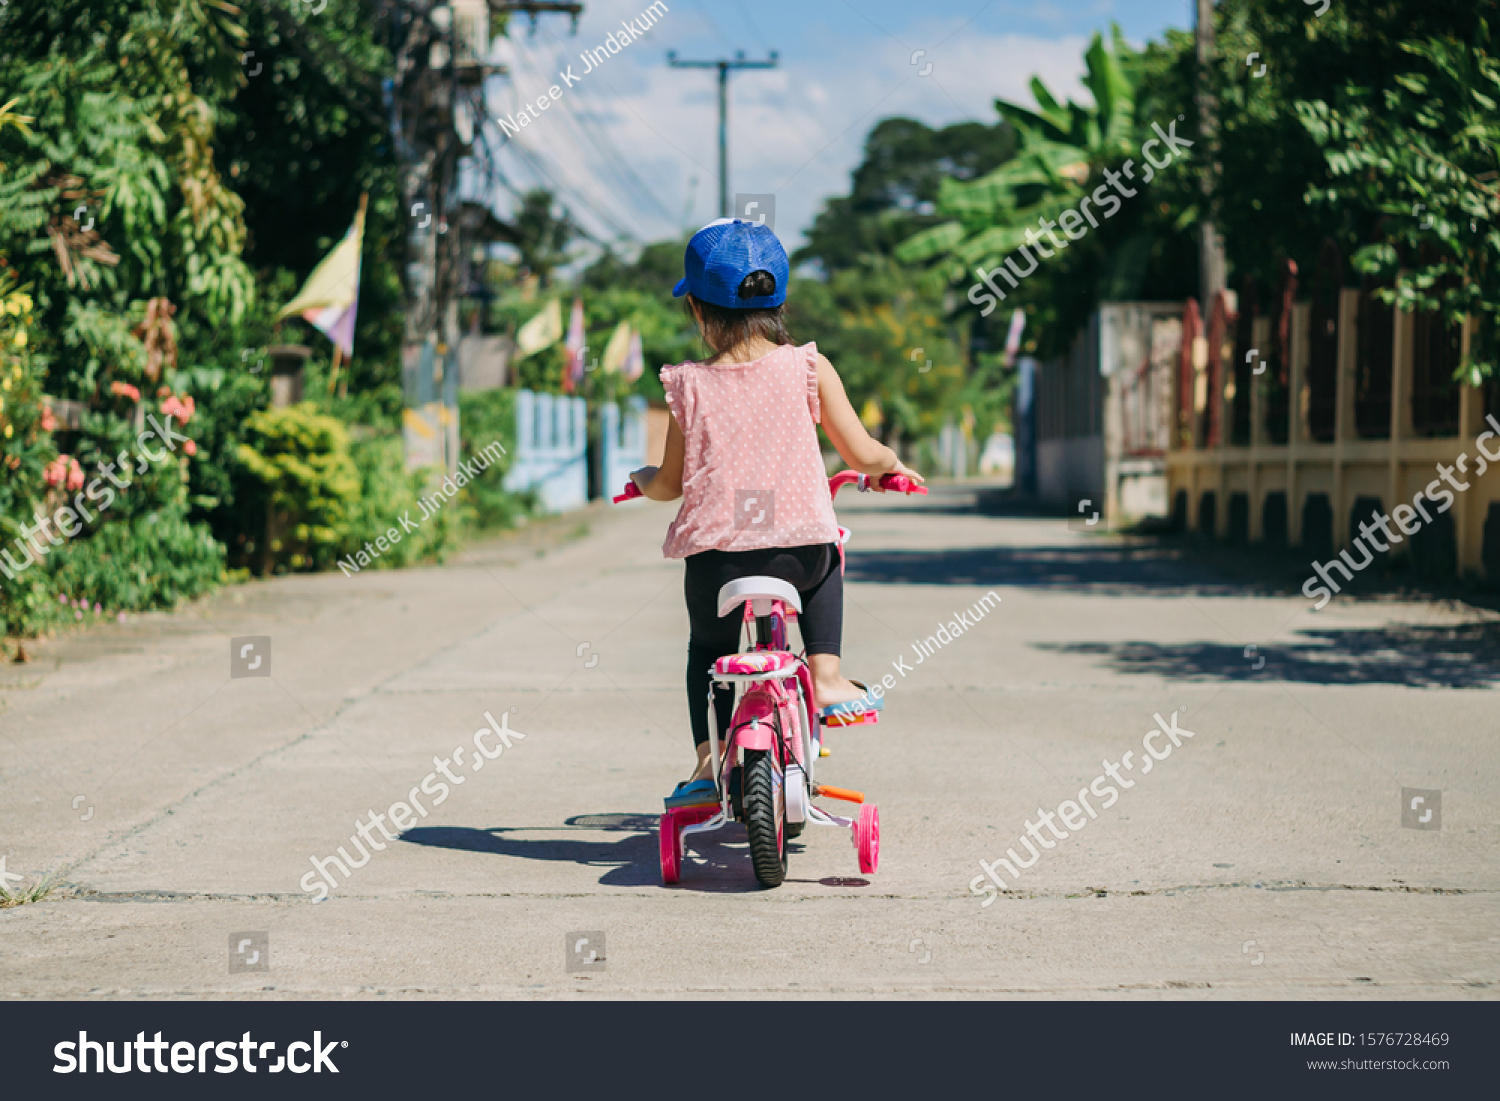 little girls bike with training wheels